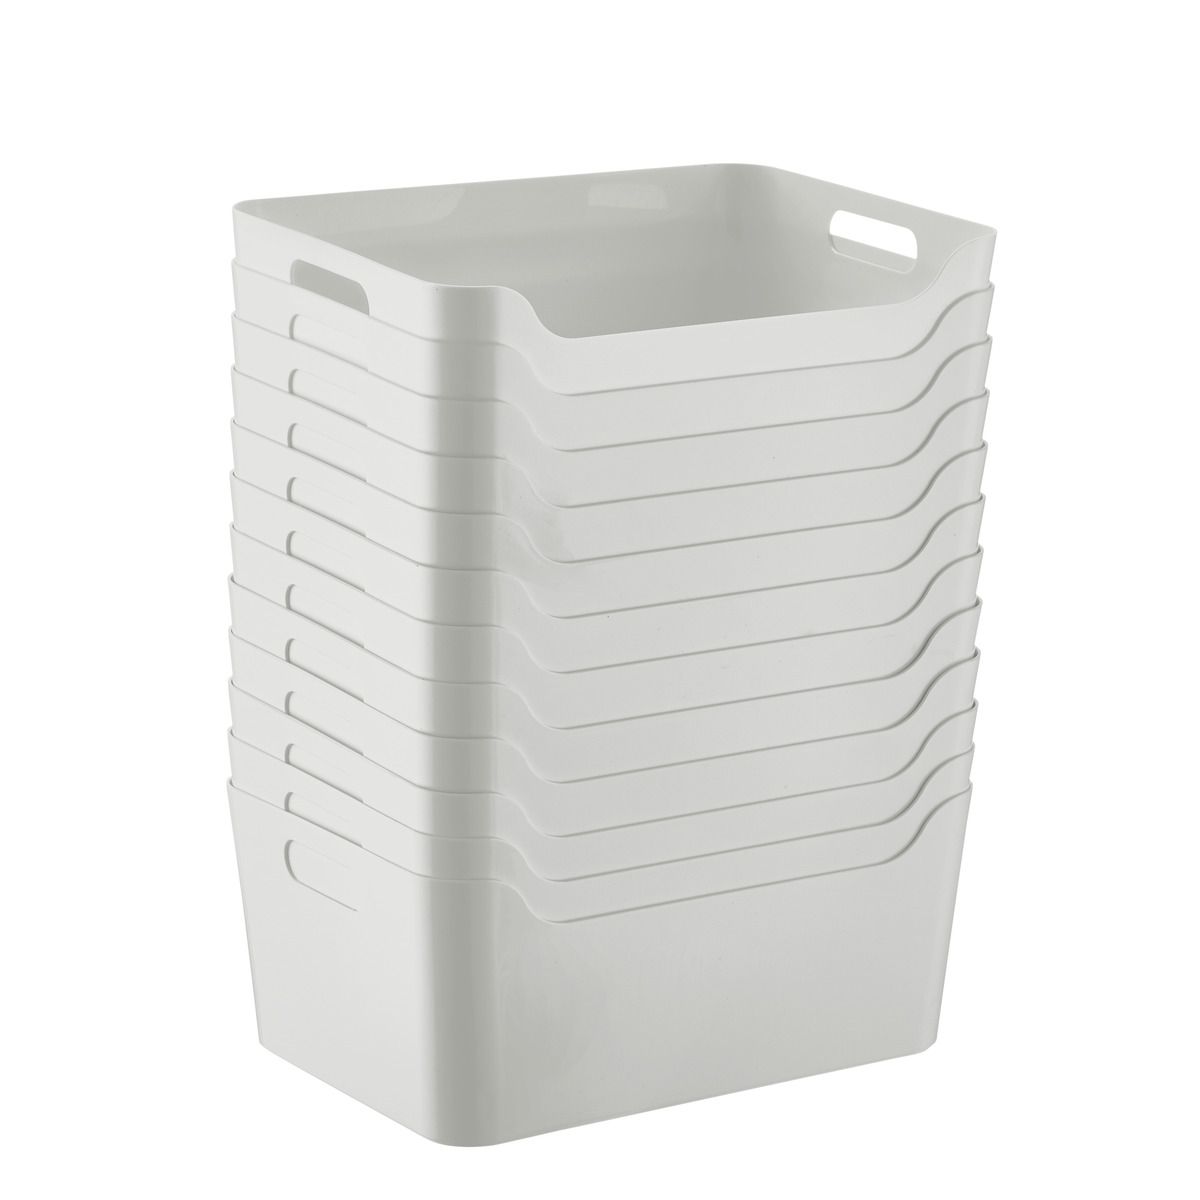 Case of 12 Medium Plastic Storage Bin w/ Handles Light Grey | The Container Store